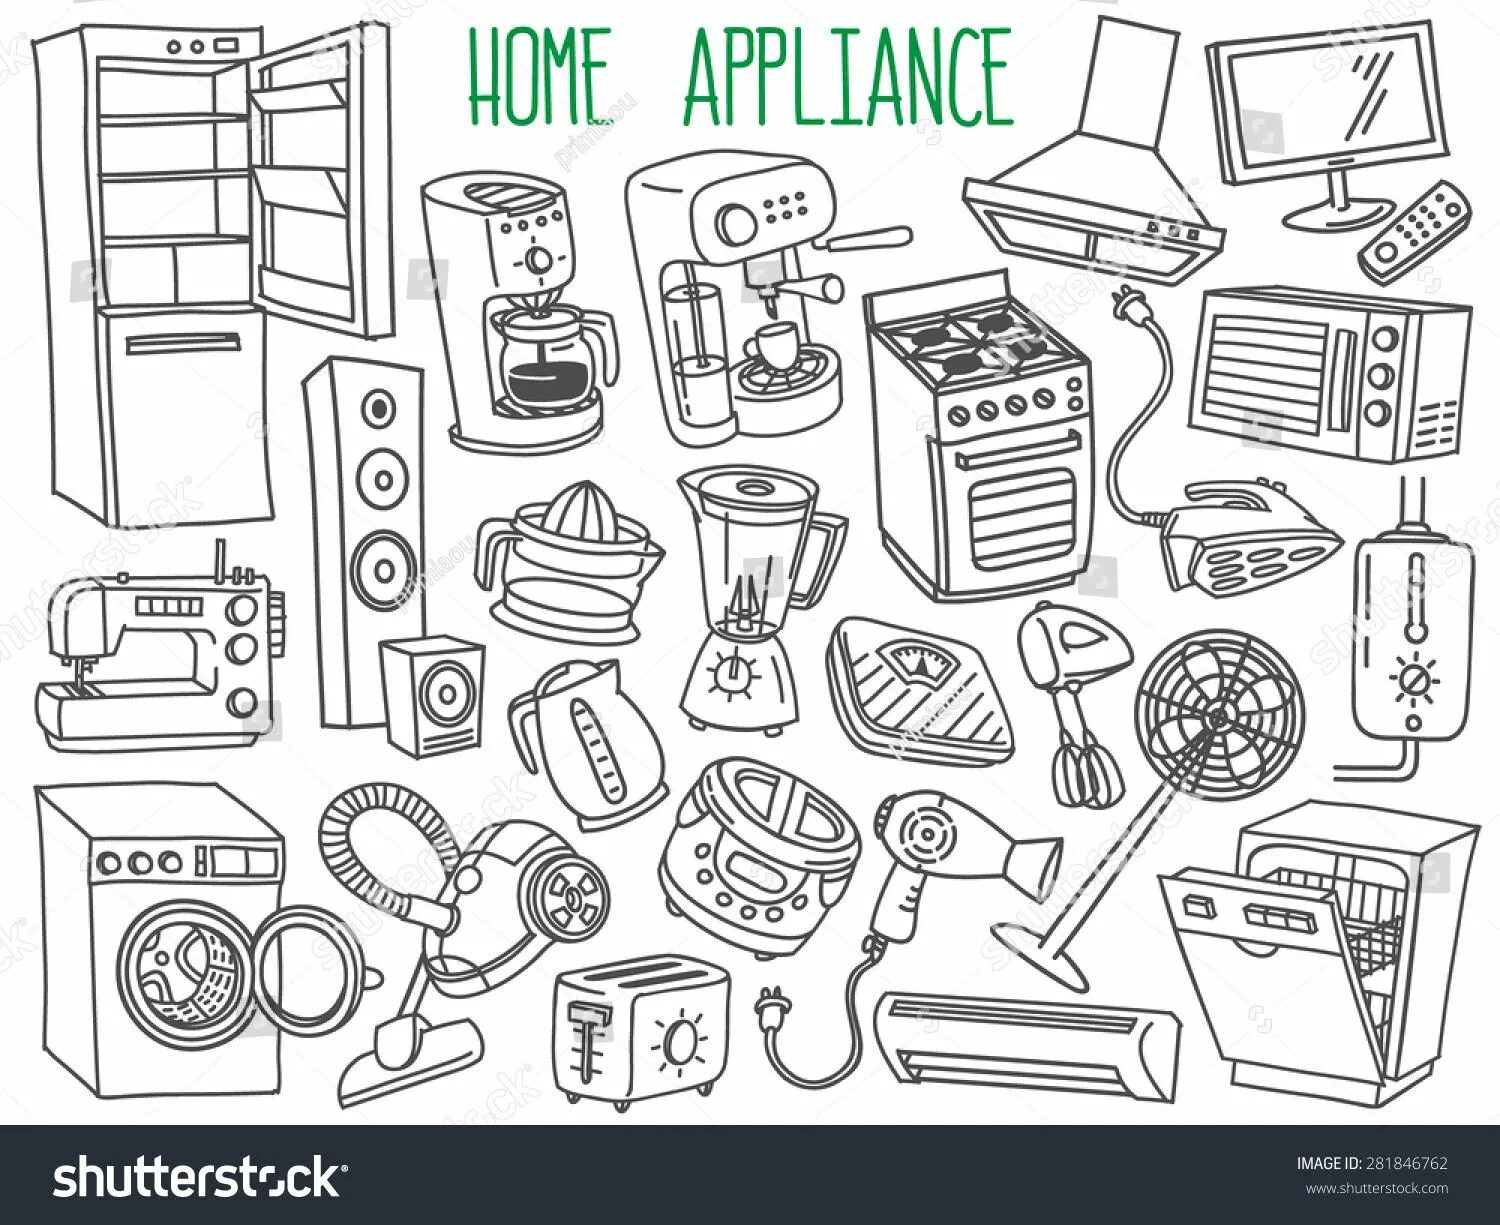 Furniture appliances #2